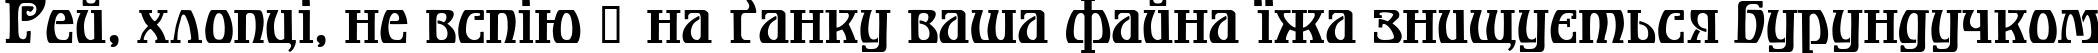 Пример написания шрифтом Bonapart-Modern текста на украинском